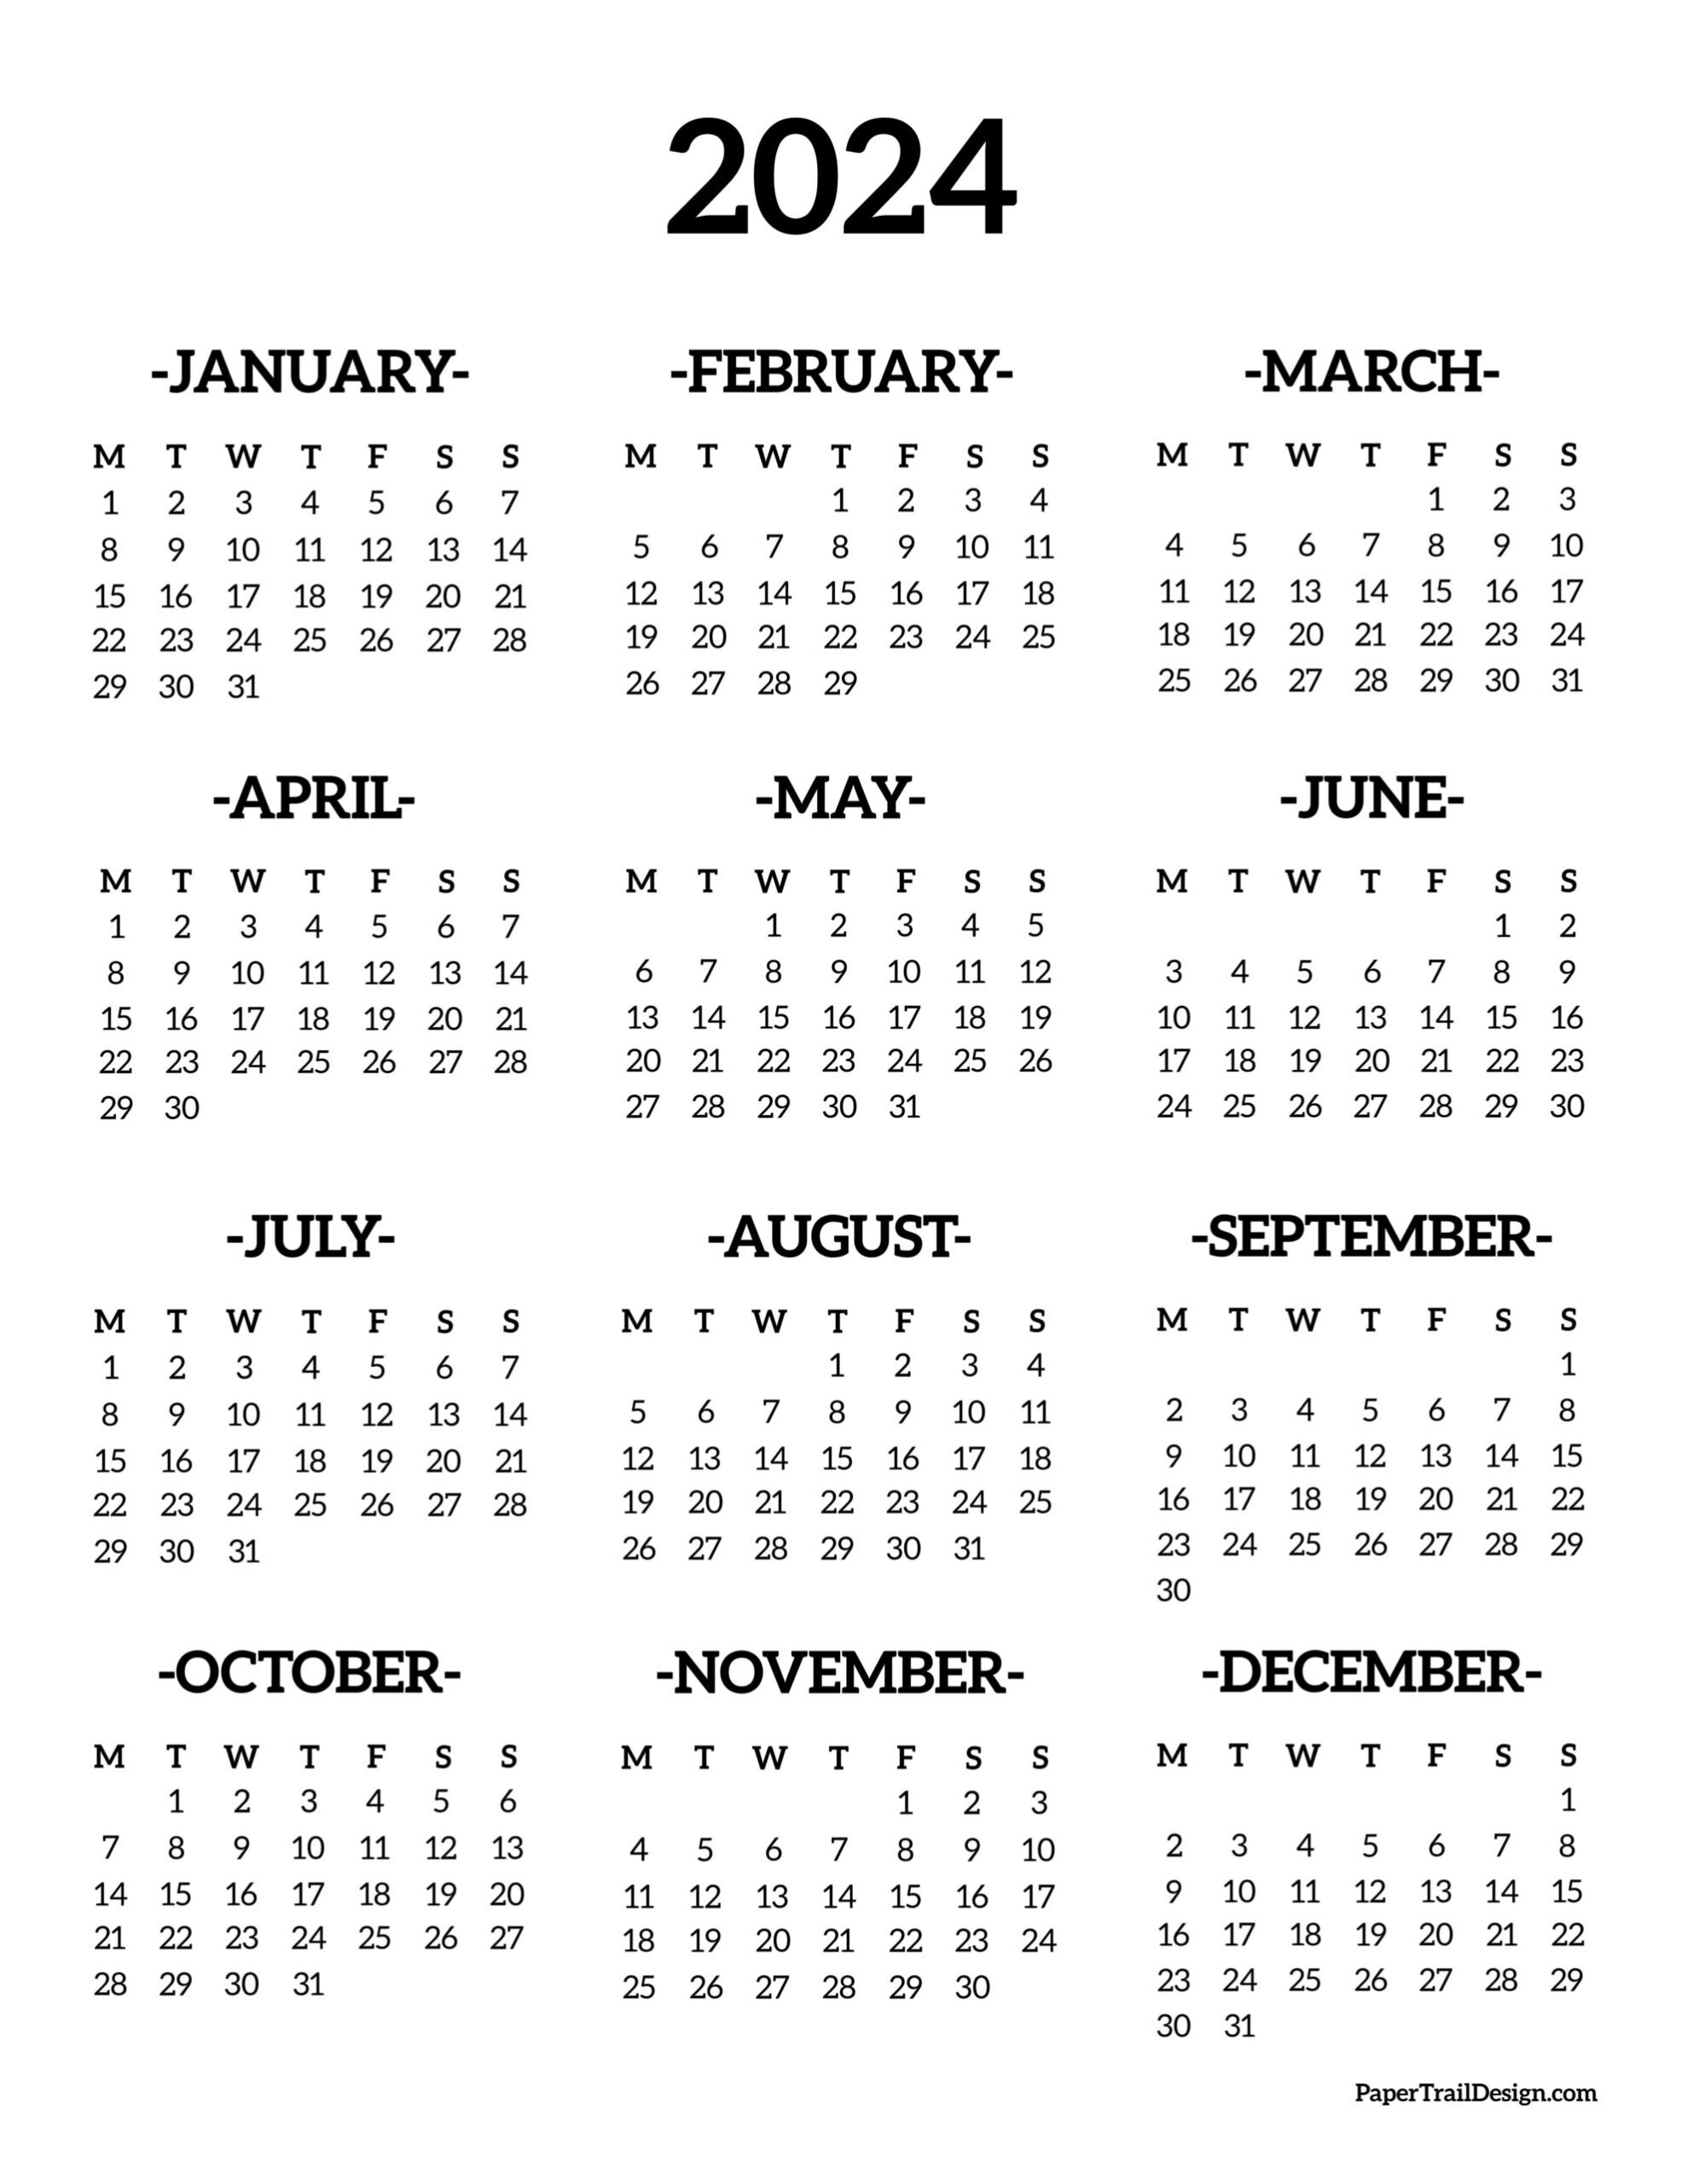 2024 Monday Start Calendar - One Page - Paper Trail Design | Printable Calendar 2024 Monday Start